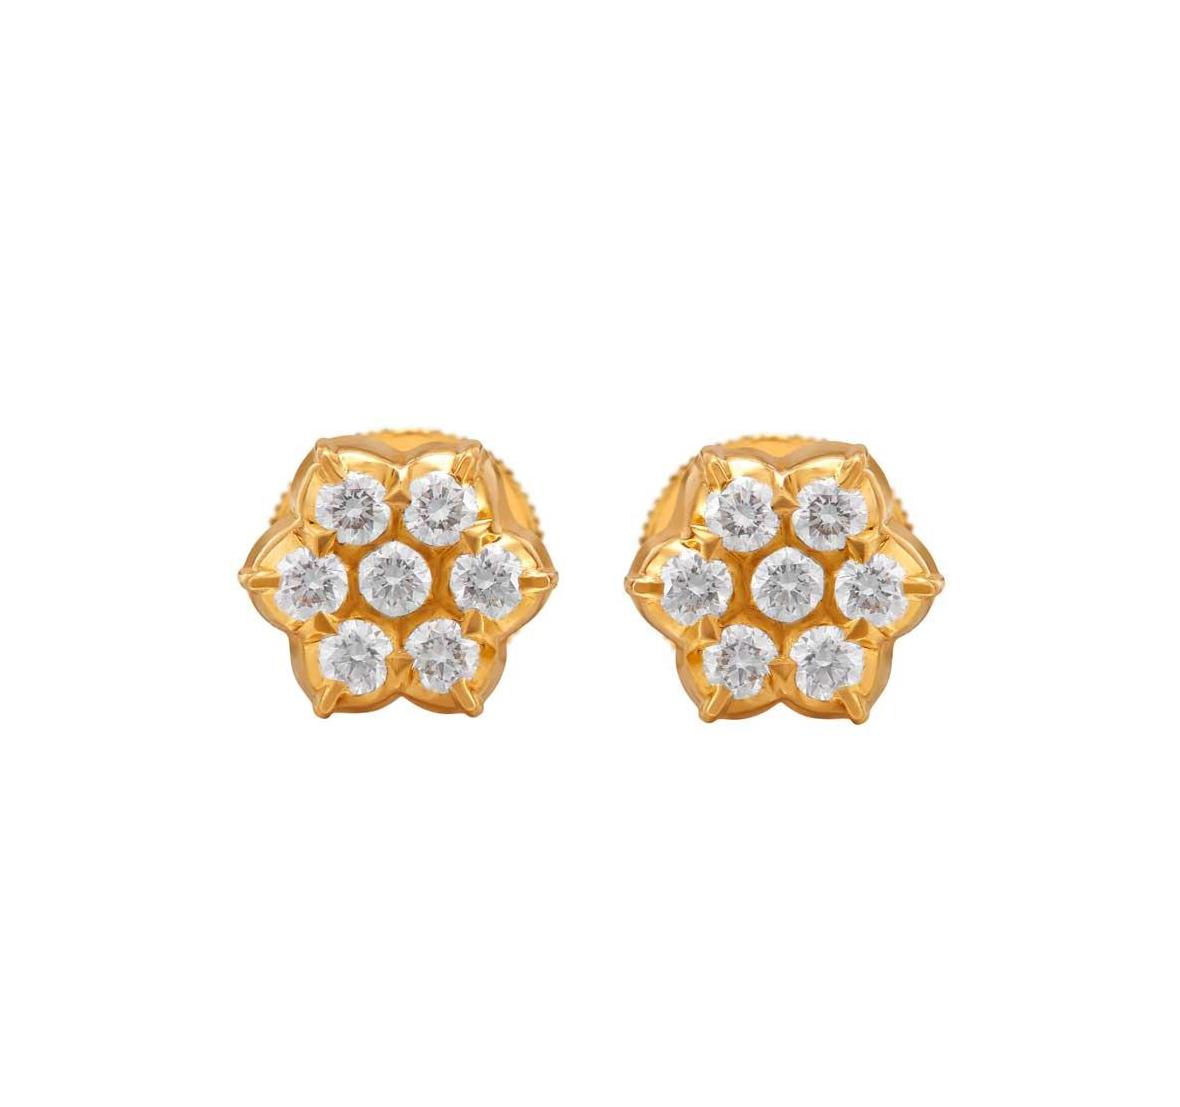 Fantastic East Indian Diamond Earrings 22K Yellow Gold